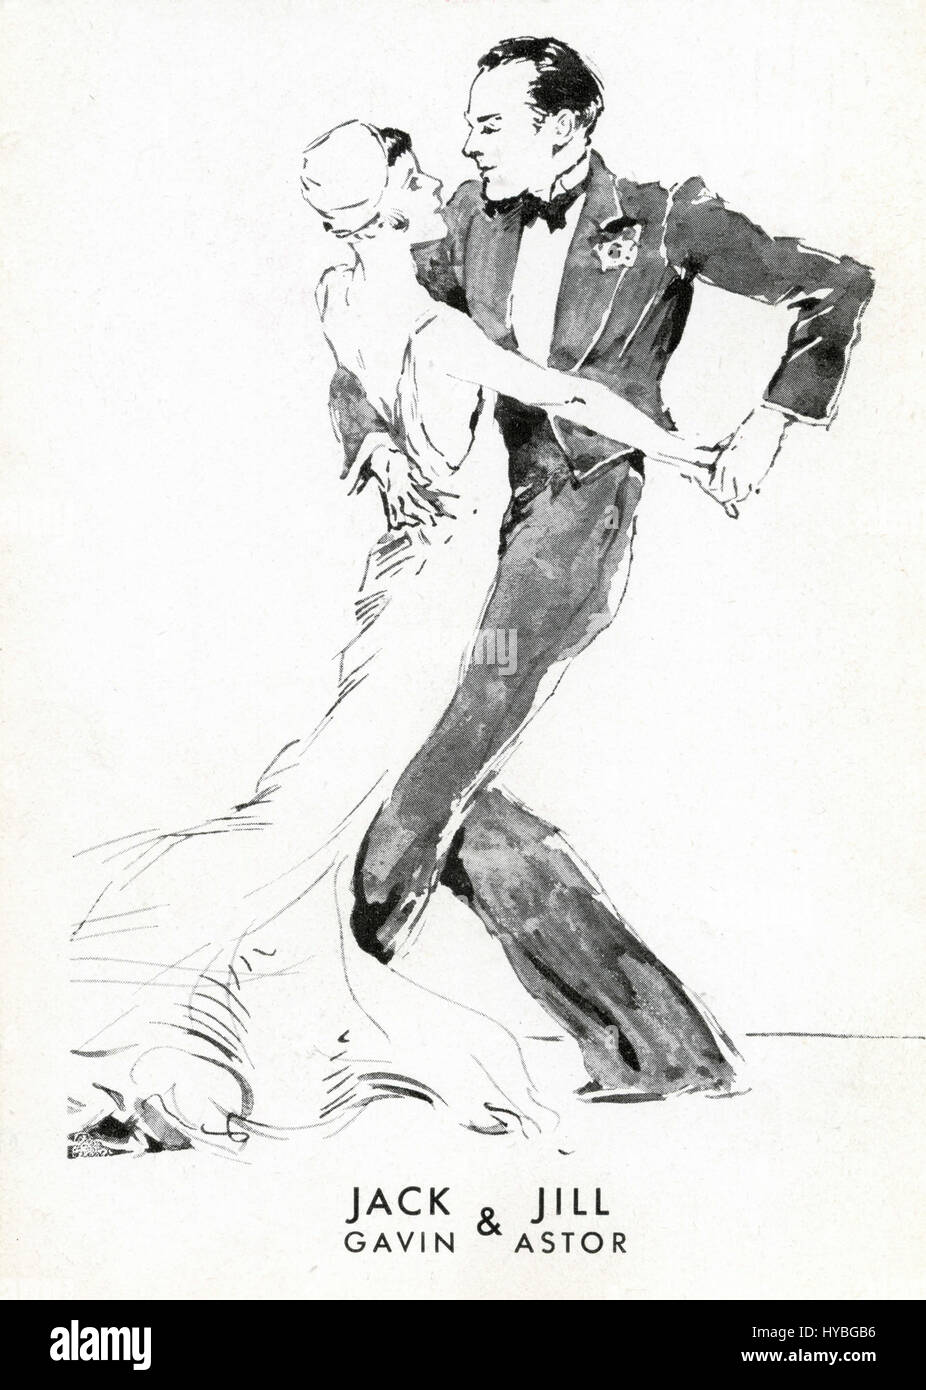 Jack Gavin and Jill Astor, dancers drawing Stock Photo